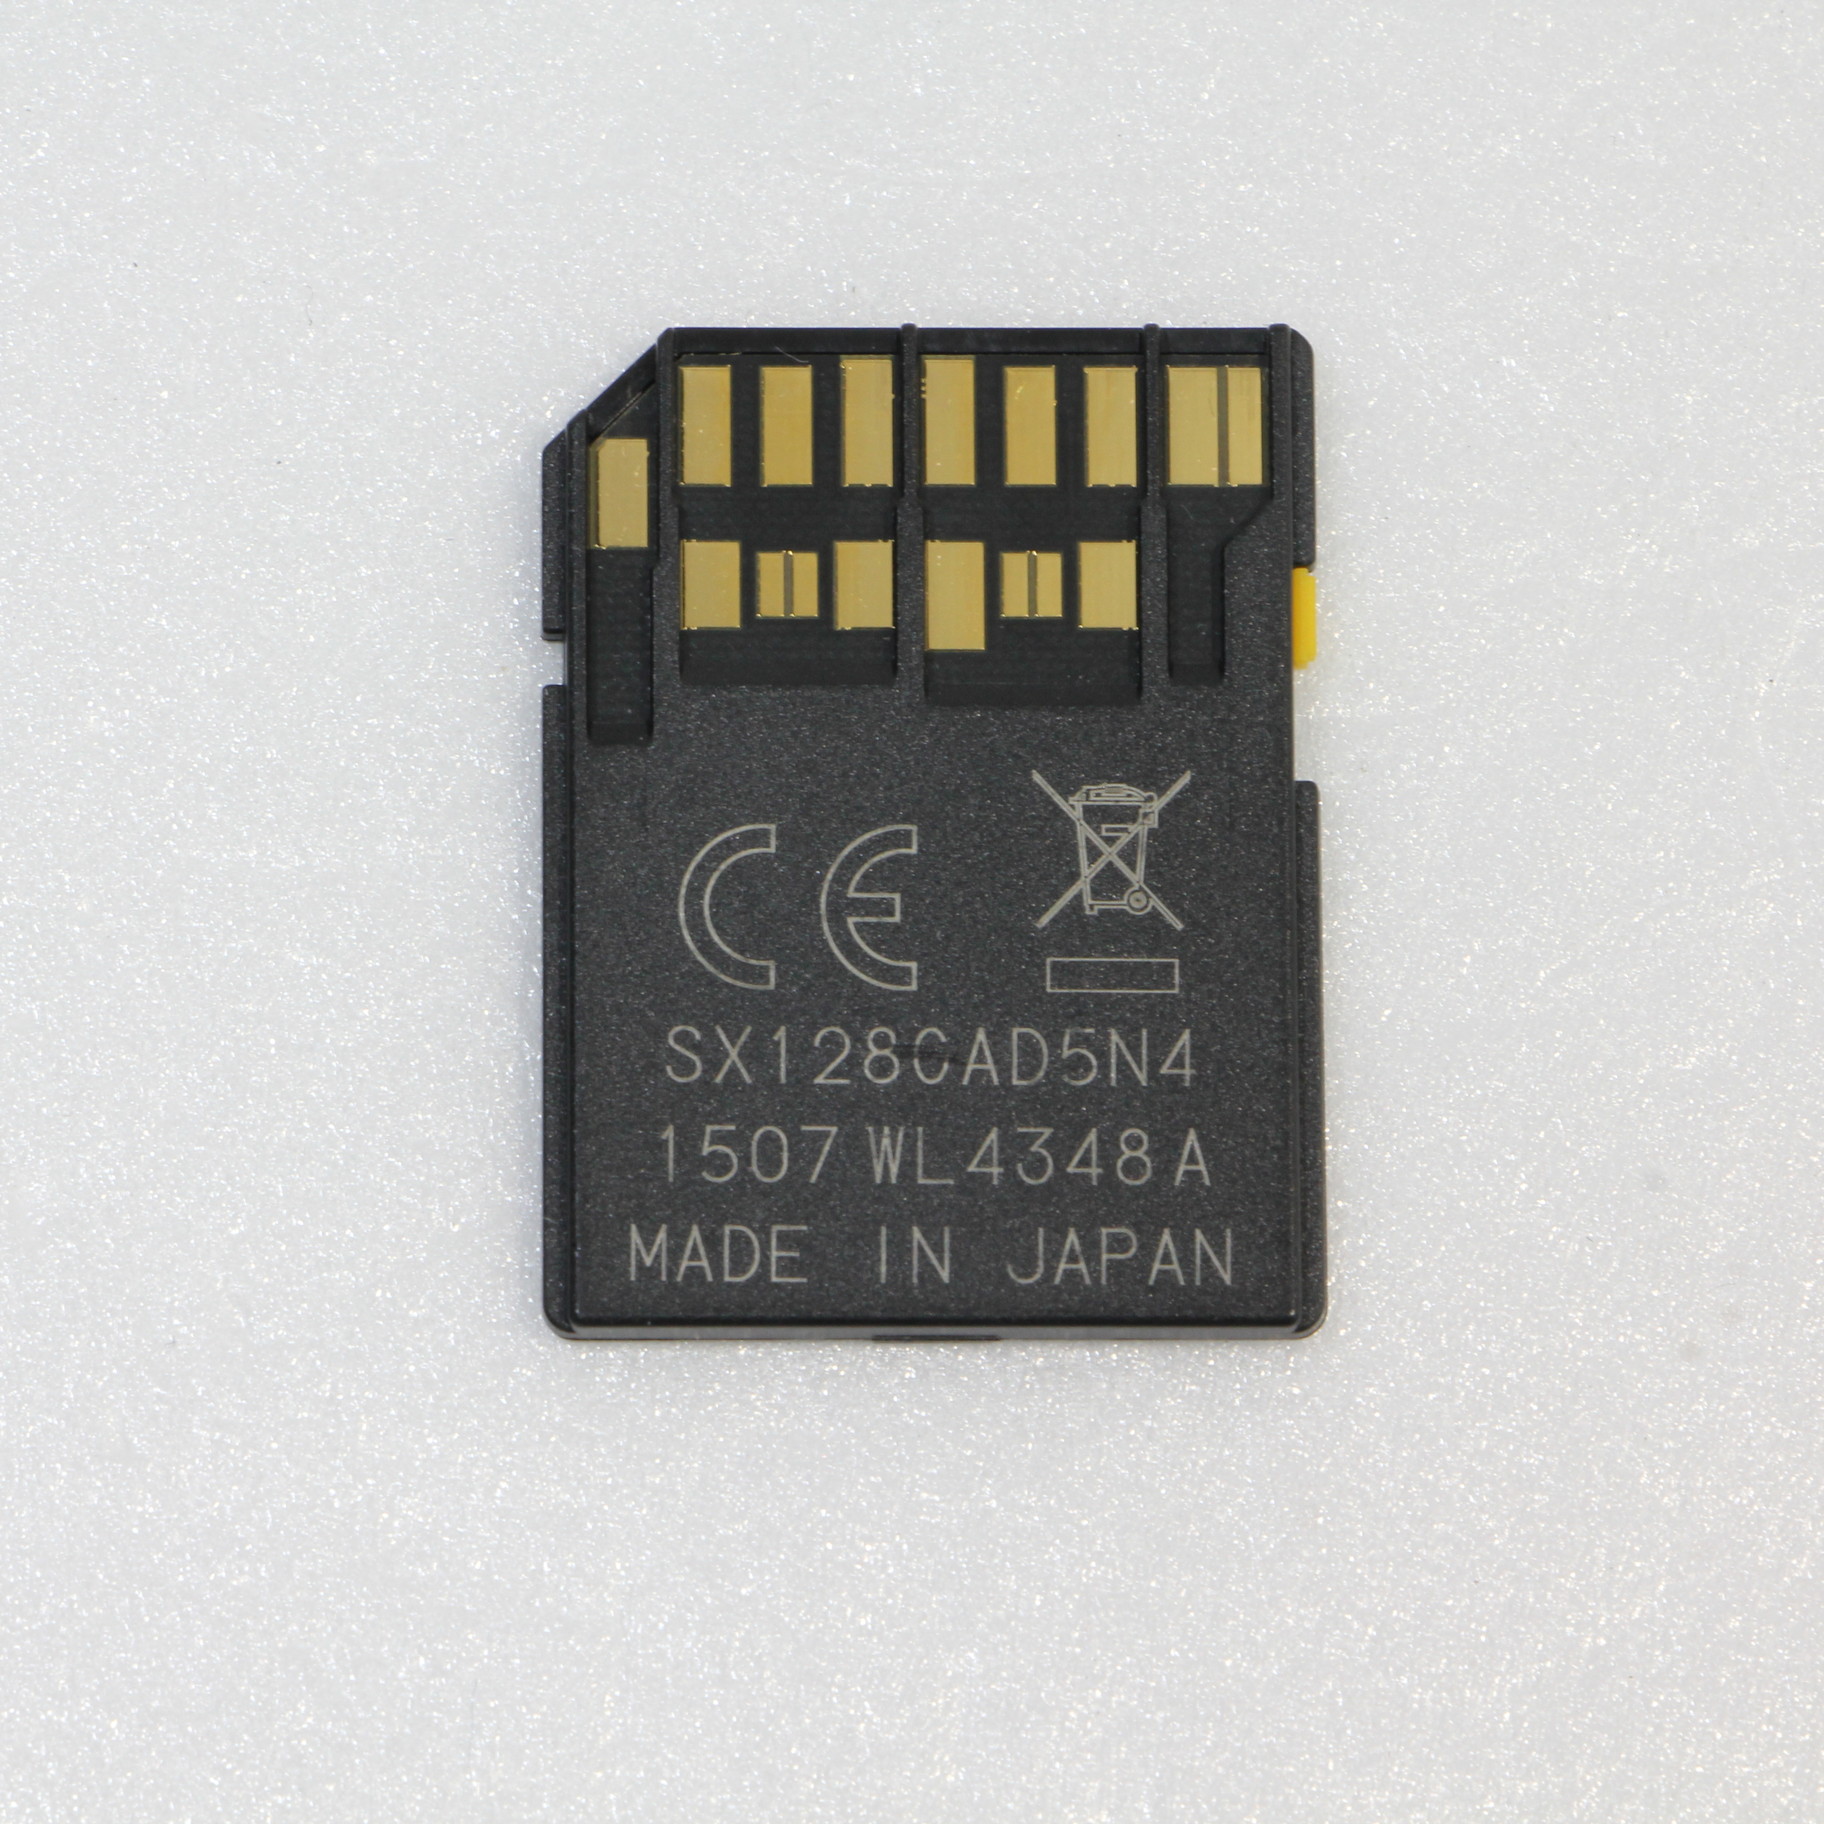 TOSHIBA SDXU-B128G UHS-II 128GB SDカード